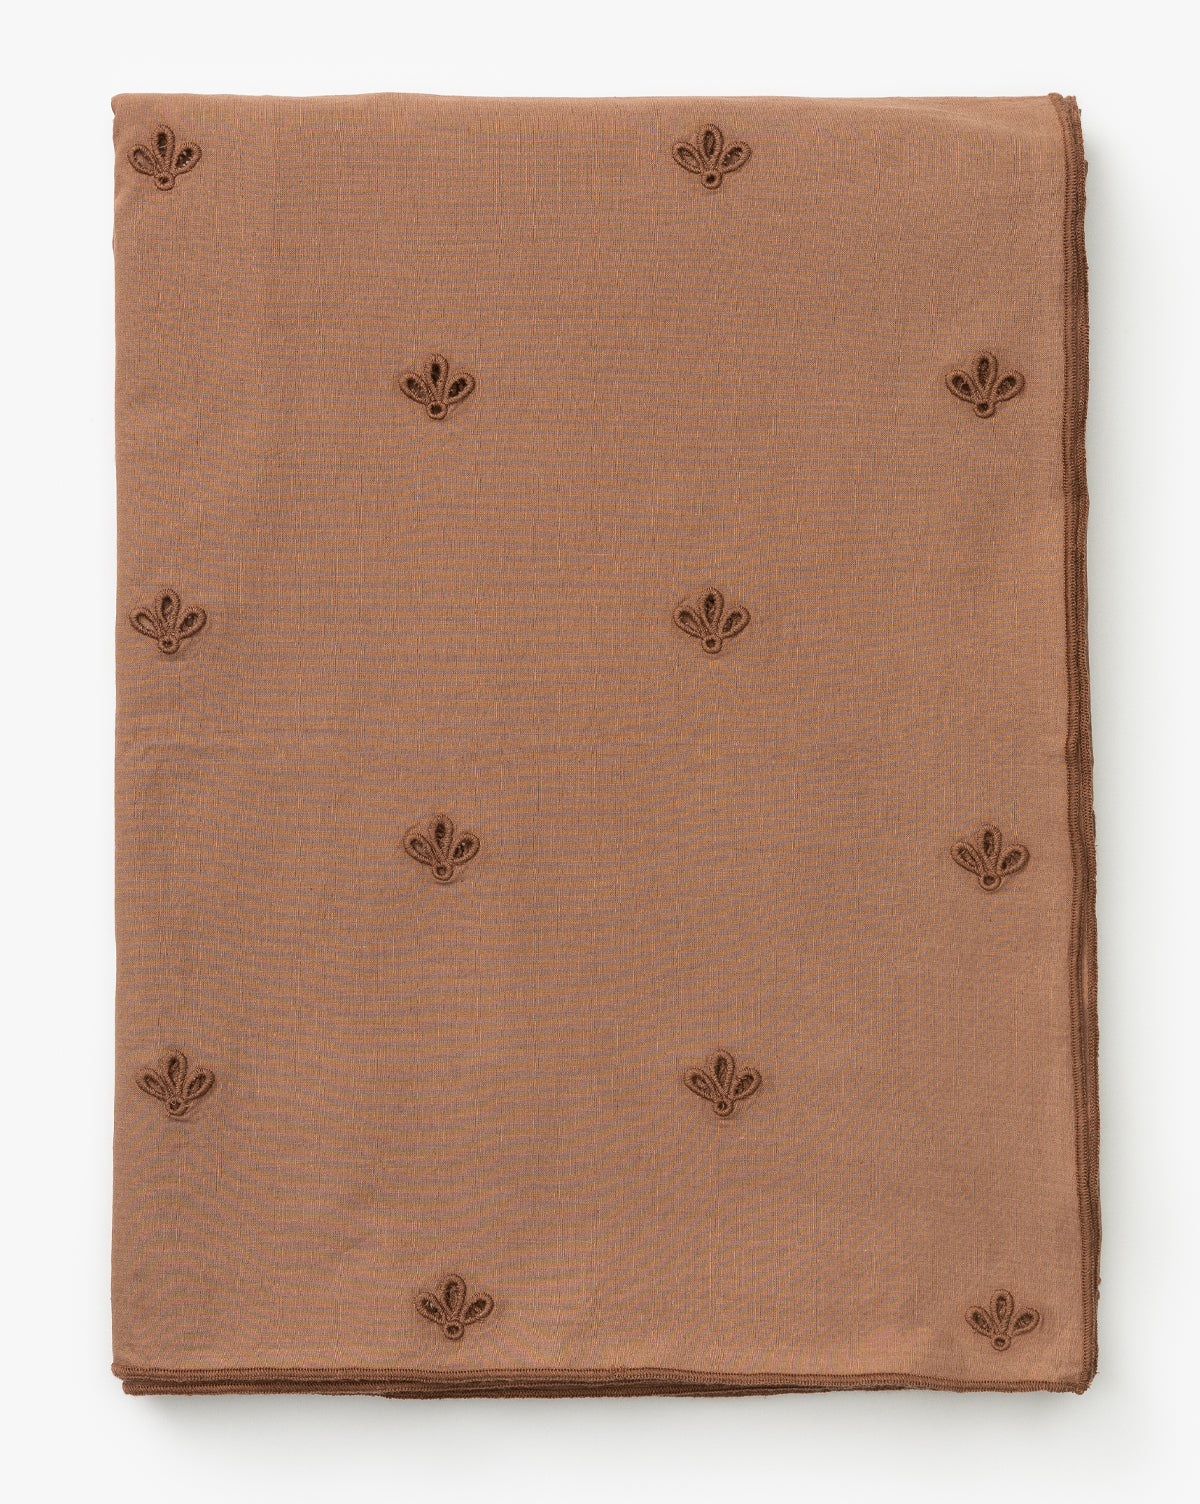 Renuka Inc., Umber Eyelet Tablecloth